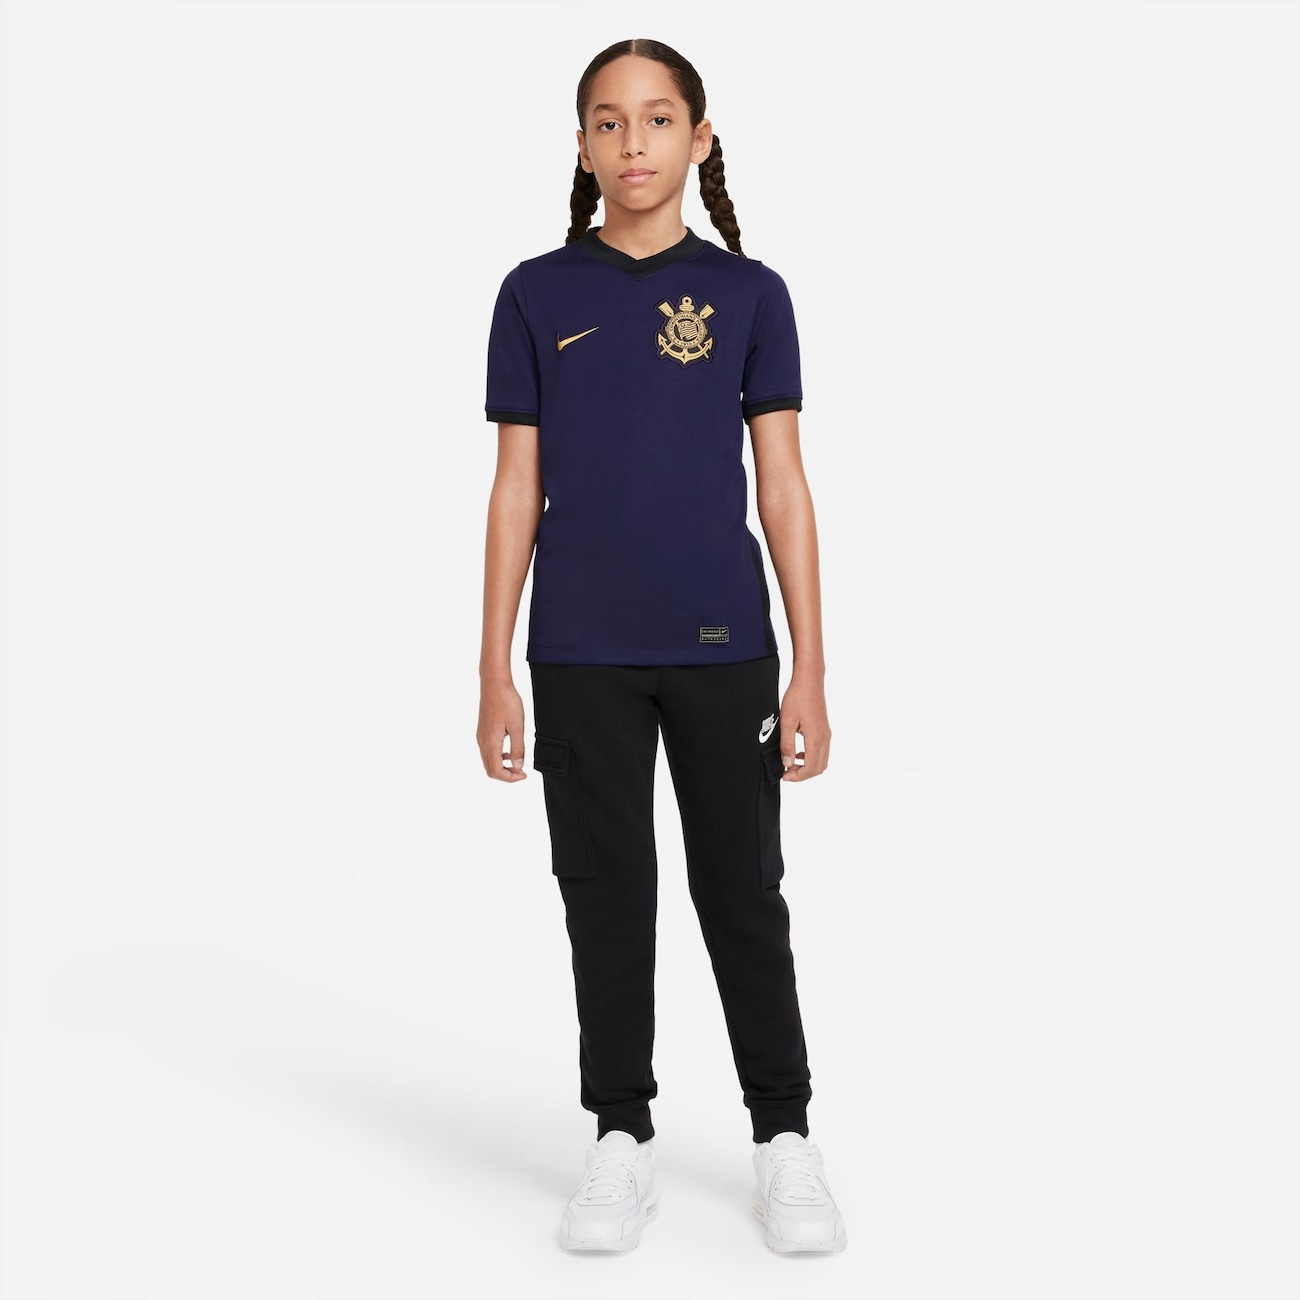 Camiseta Nike Corinthians III 2021/22 Torcedor Pro Infantil - Foto 6